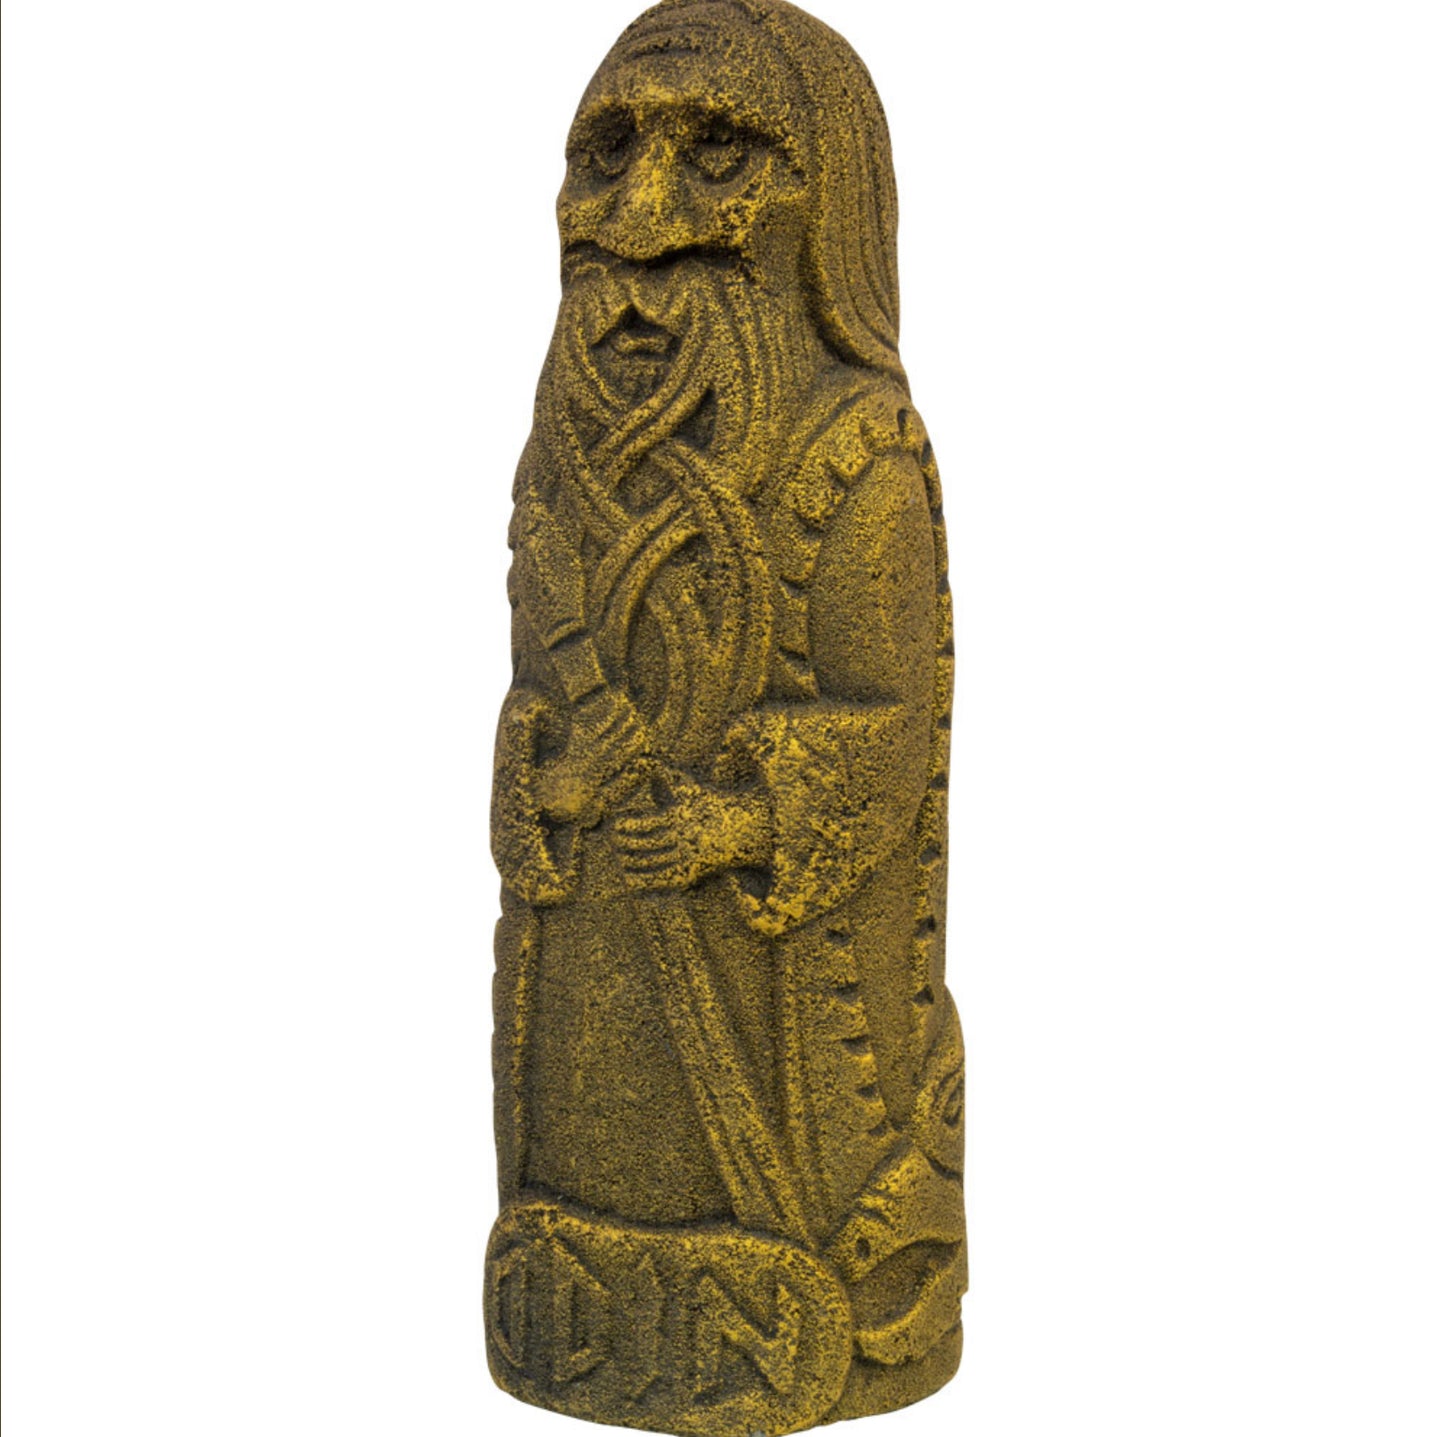 Volcanic Stone Statue - Odin - Norse God